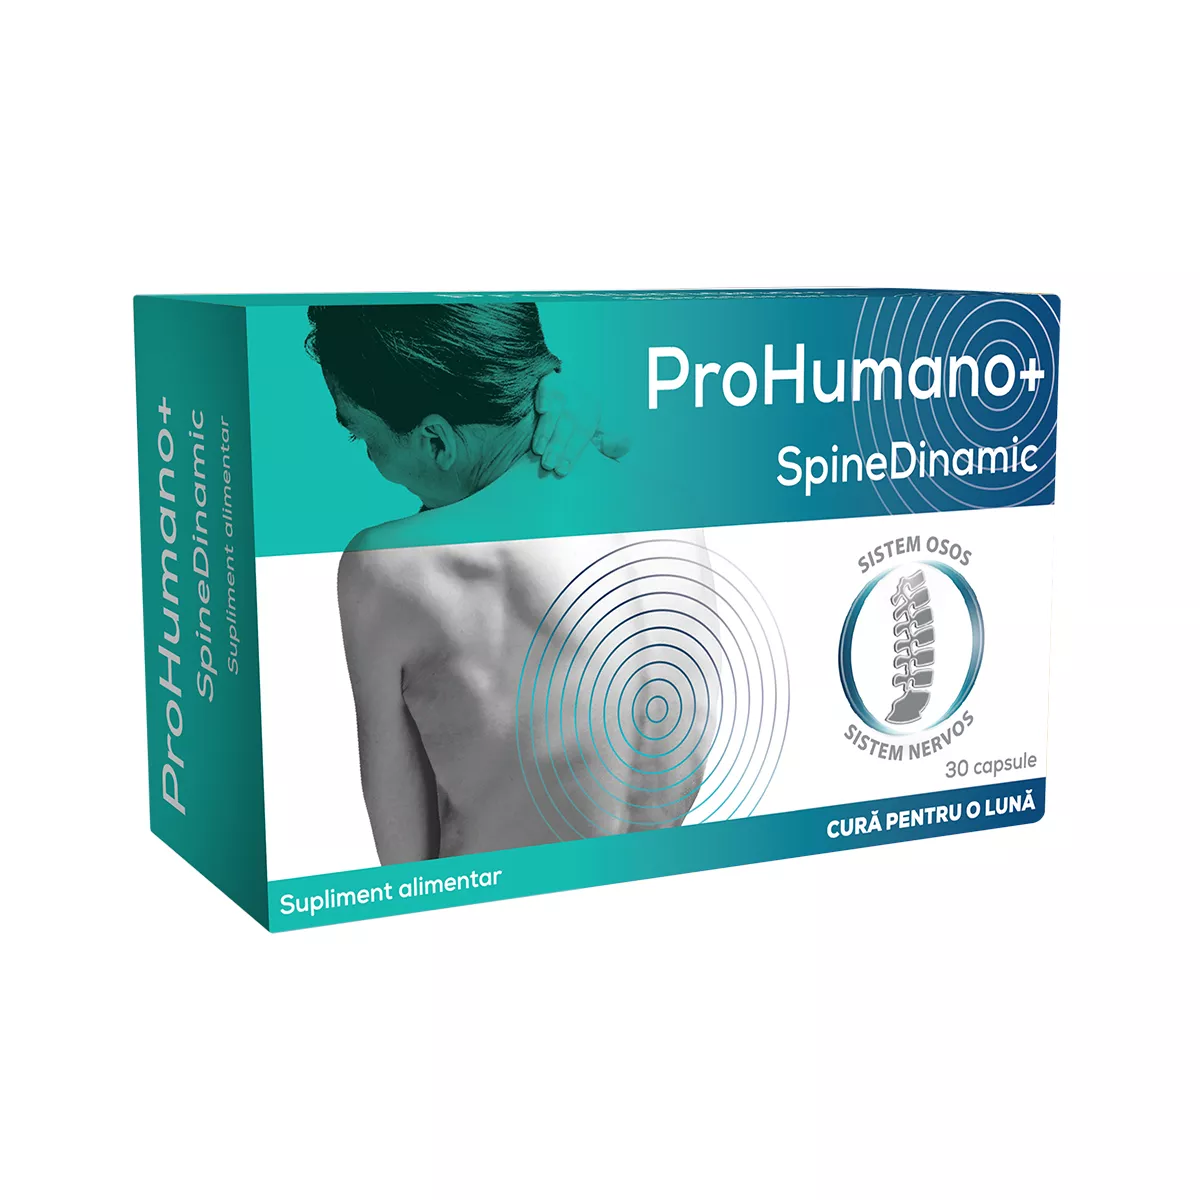 ProHumano+ Spinedinamic, 30 capsule, Pharmalinea, [],nordpharm.ro